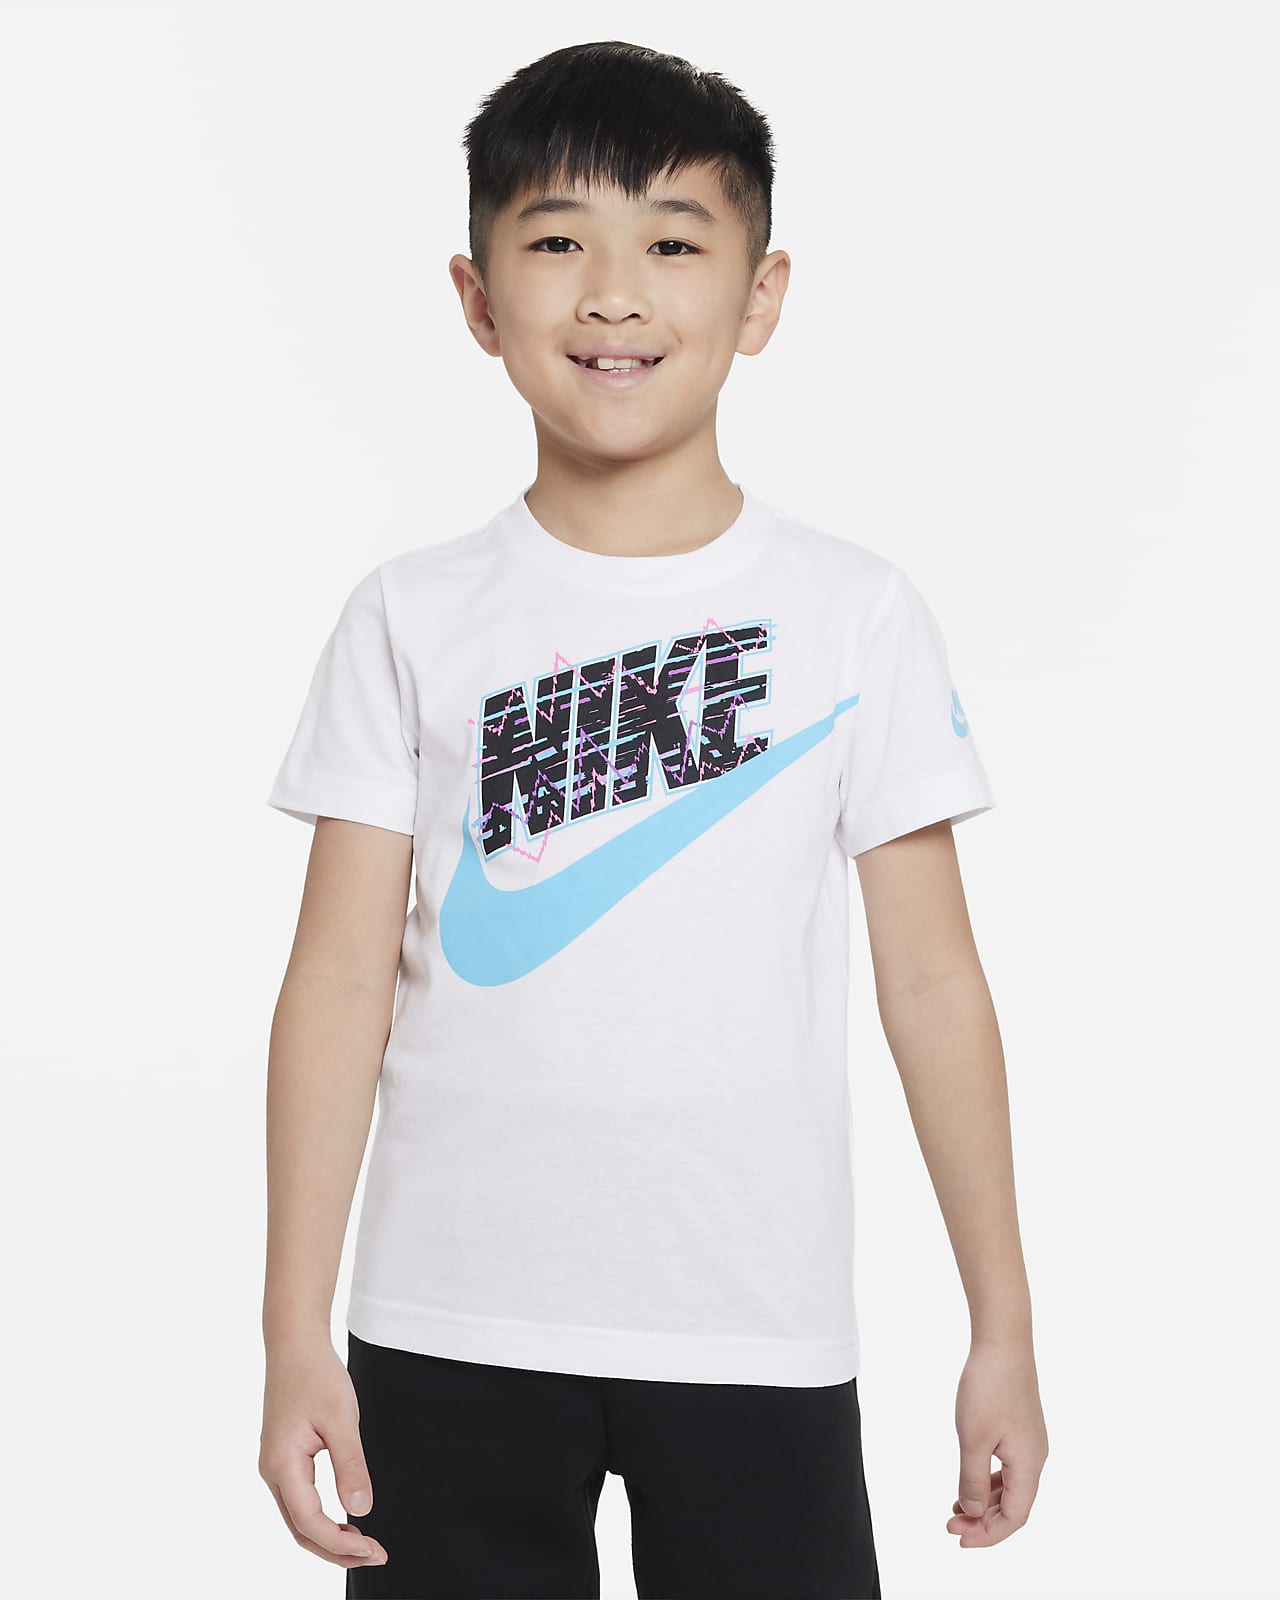 Emotie Lotsbestemming Wetland Nike New Wave Futura Tee Little Kids' T-Shirt. Nike.com